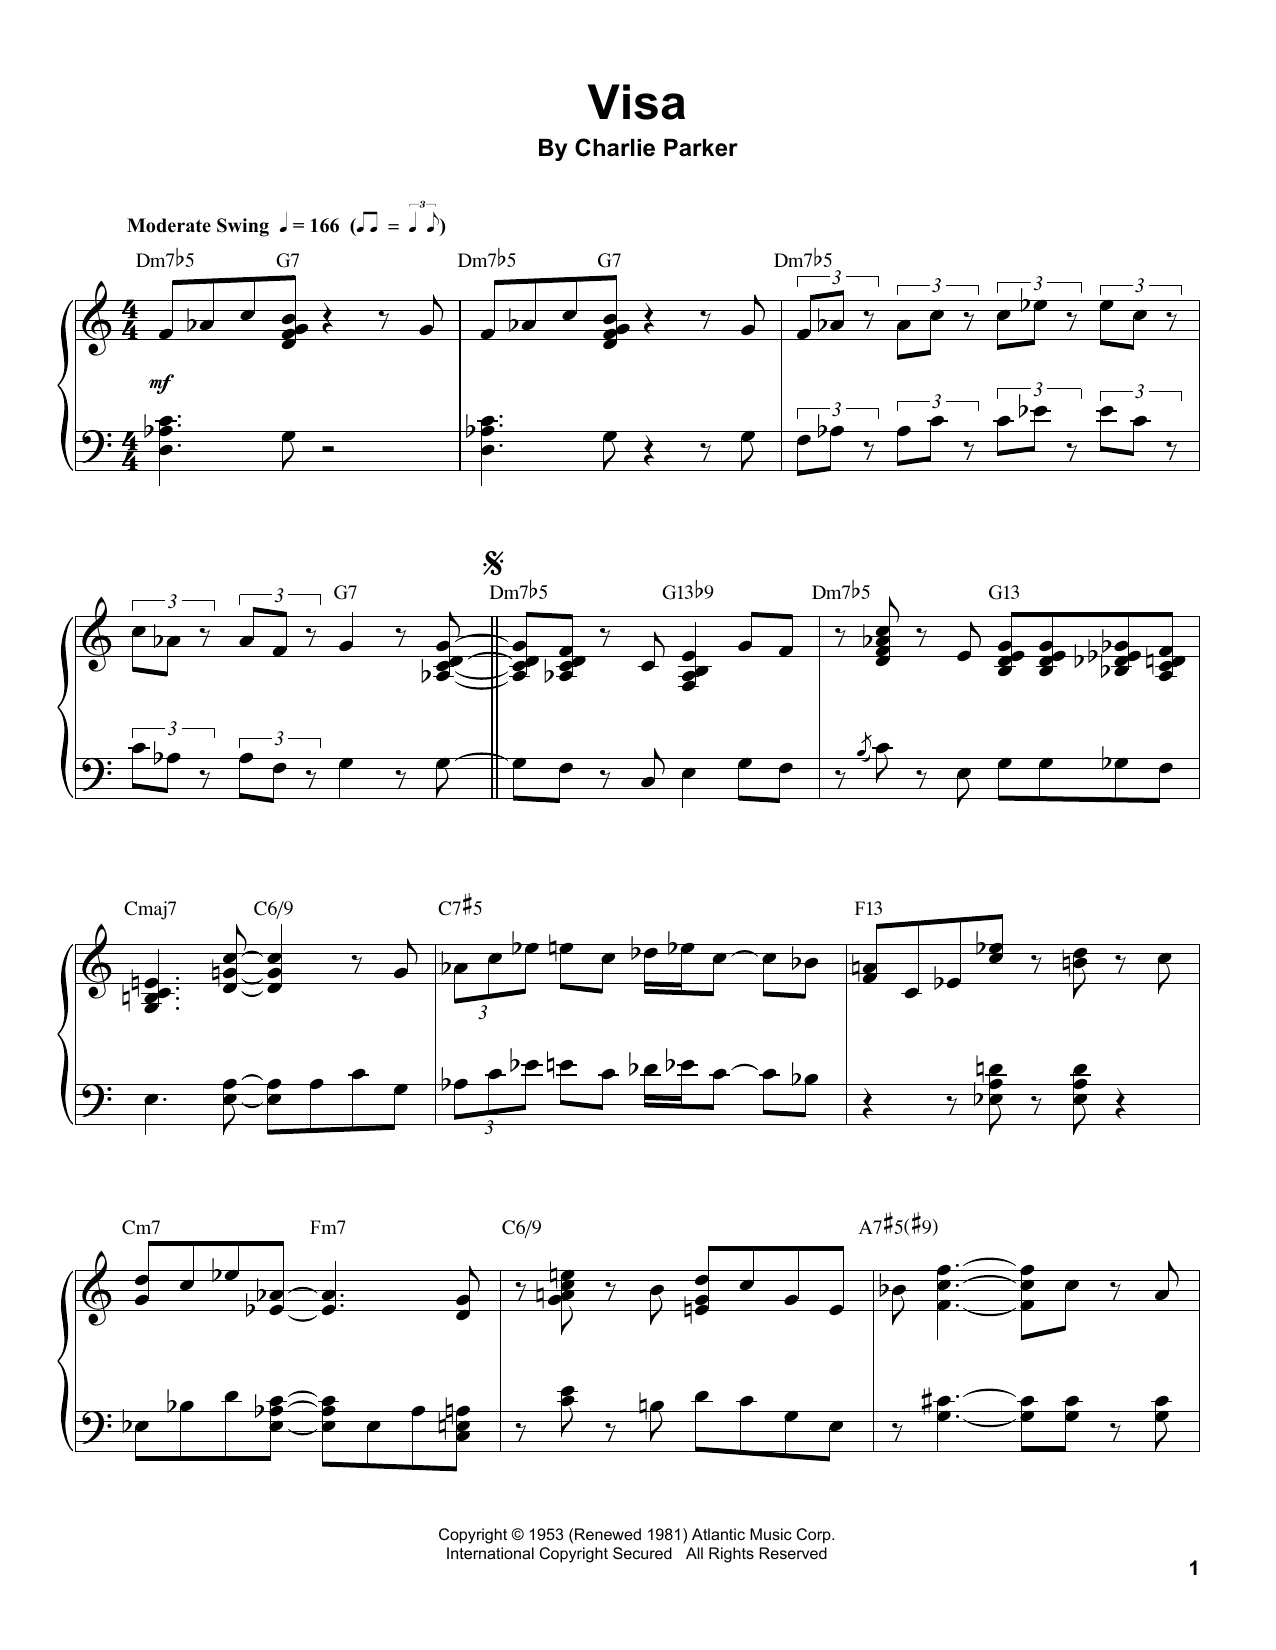 Charlie Parker Visa Sheet Music Notes & Chords for Real Book – Melody & Chords - Download or Print PDF